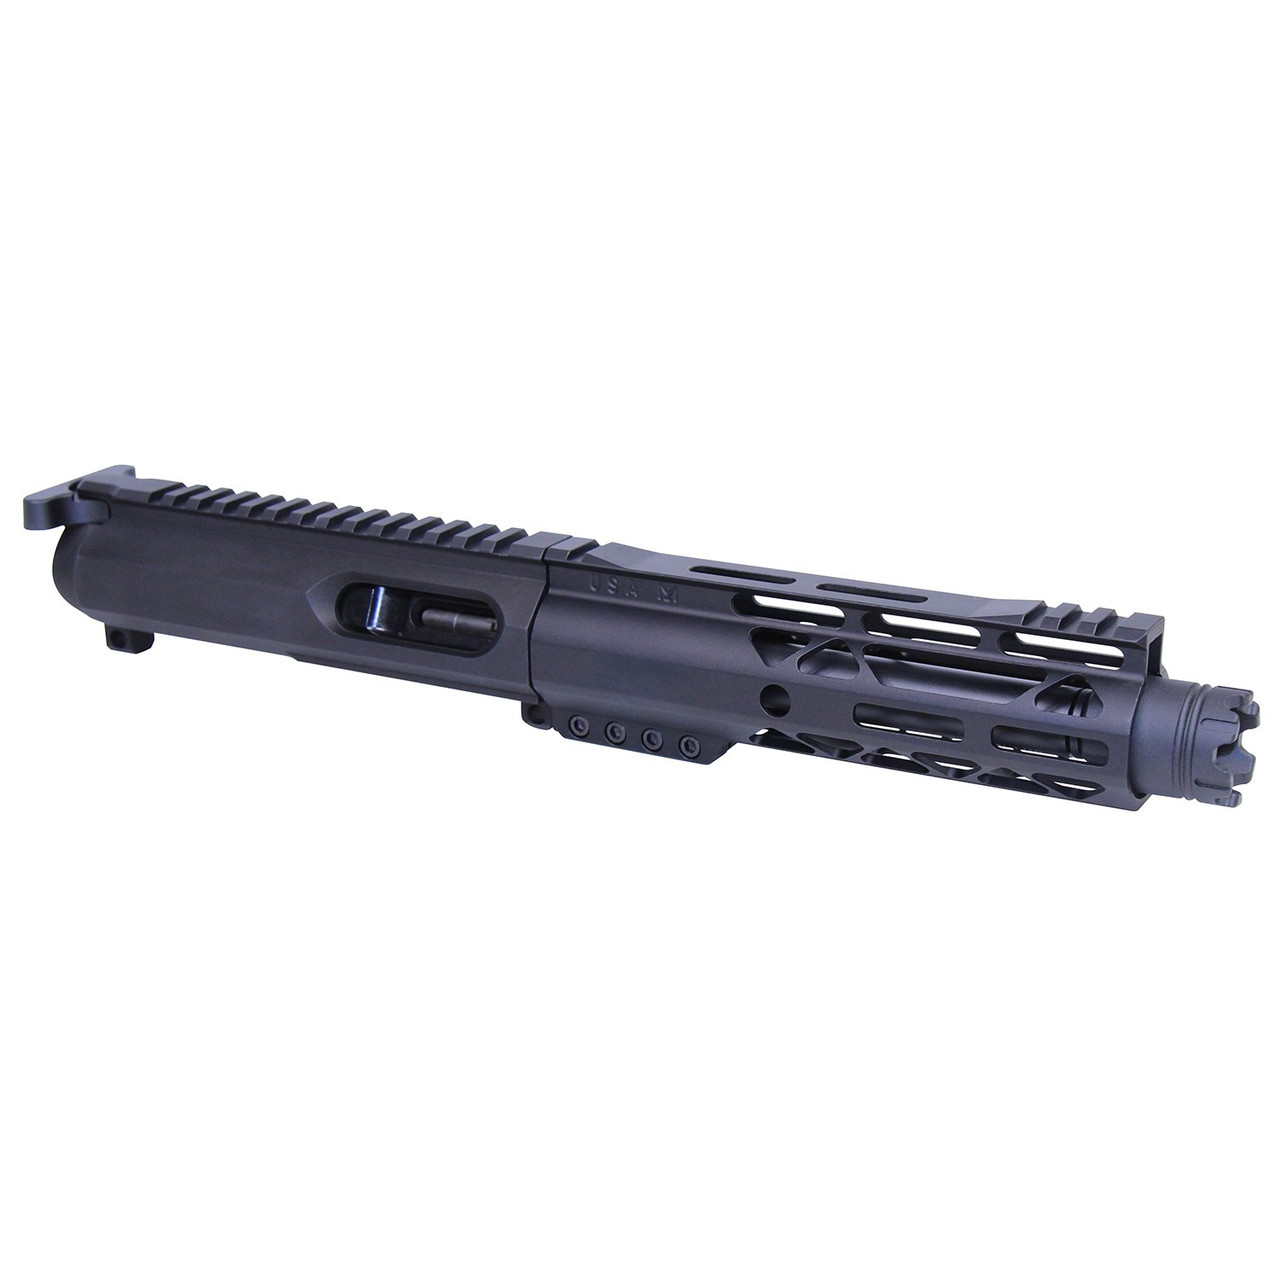 Guntec USA 9MM-KIT-6 AR-15 9mm Cal Complete Upper Kit W/7" AIR-LOK Gen 2 Handguard & Mini Trident Flash Can (Anodized Black)